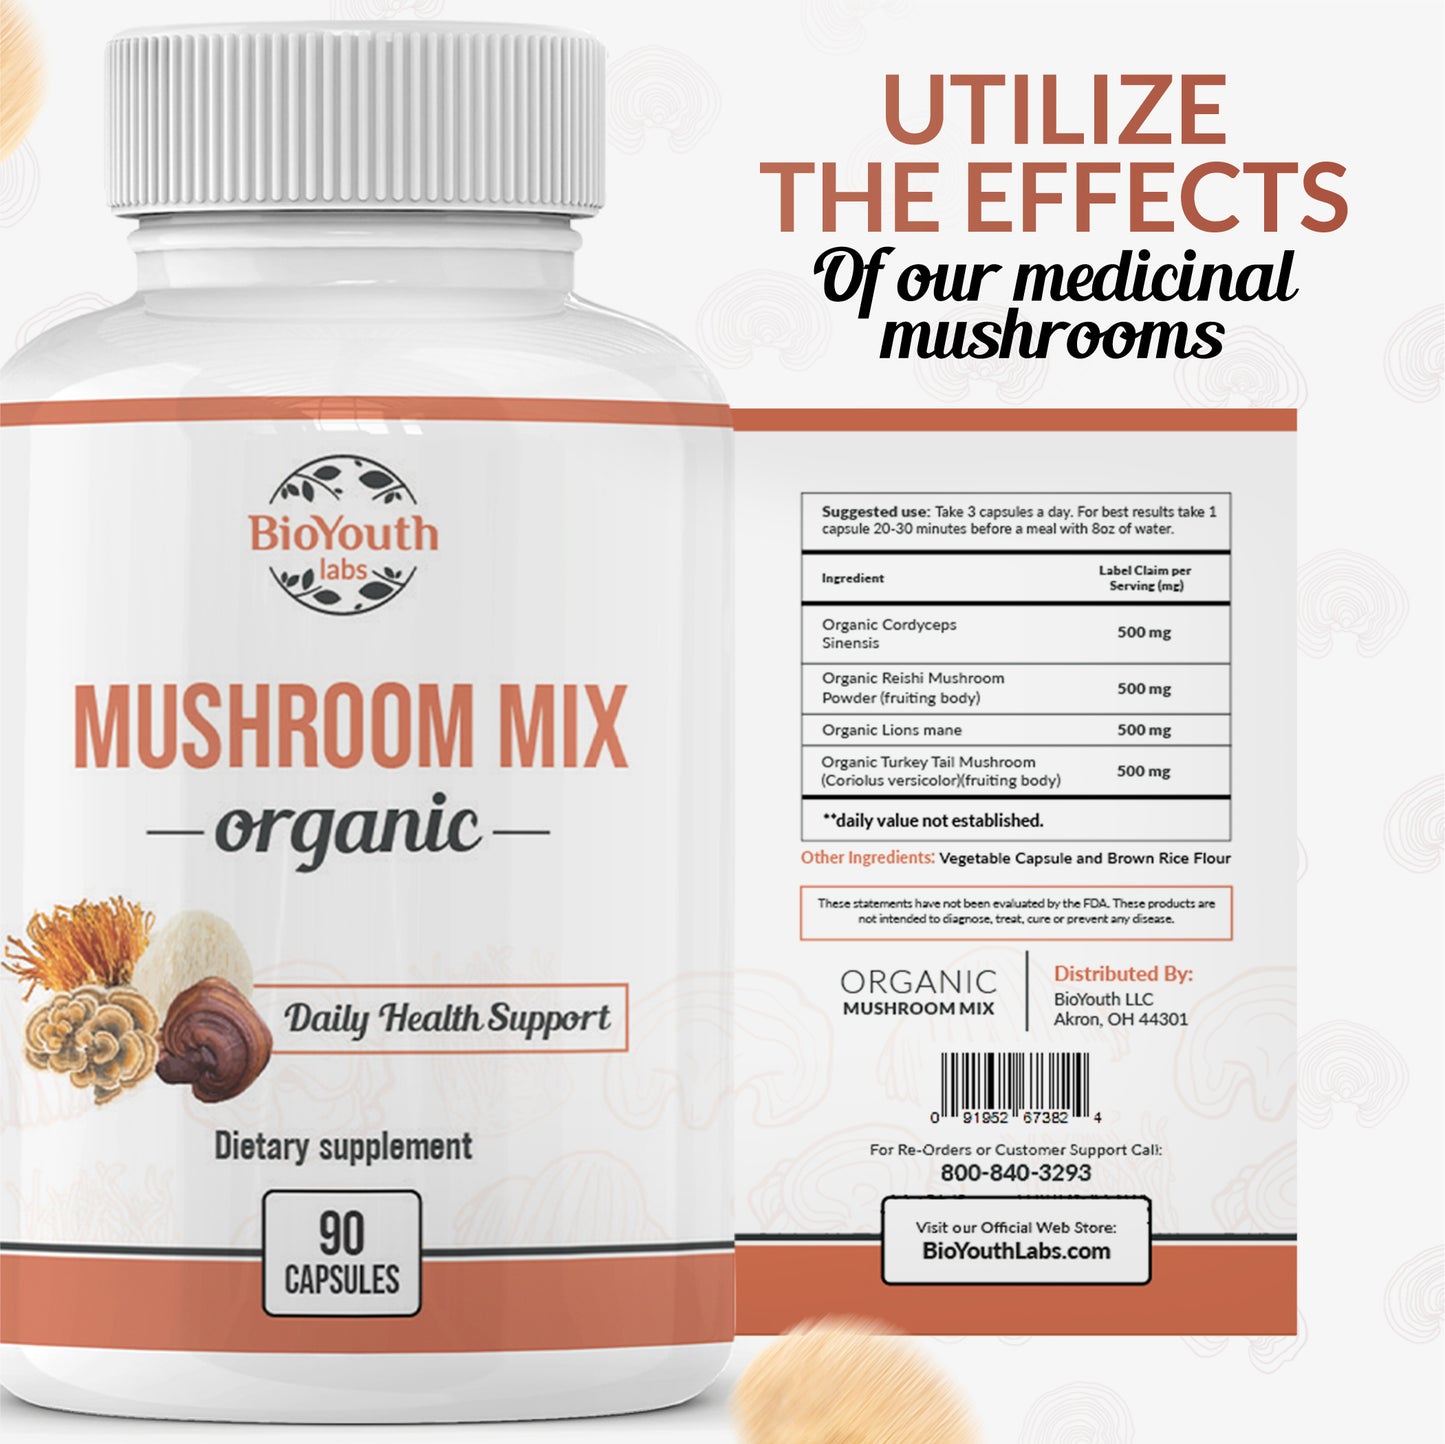 Organic Mushroom Mix Immune System Support (Reishi, Cordyceps, Lione Mane, Turkey Tail)